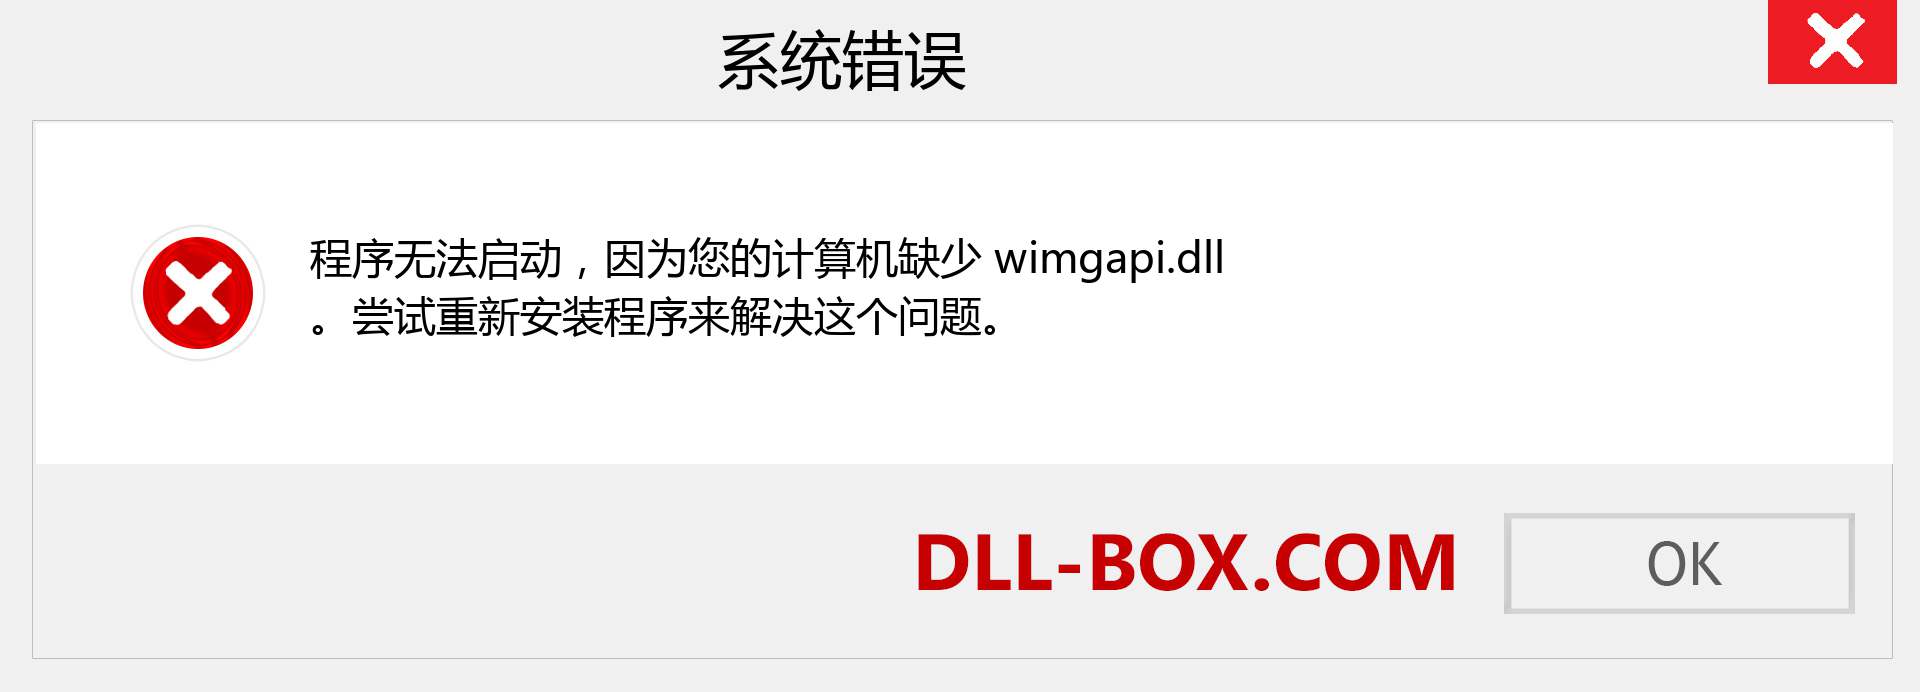 wimgapi.dll 文件丢失？。 适用于 Windows 7、8、10 的下载 - 修复 Windows、照片、图像上的 wimgapi dll 丢失错误